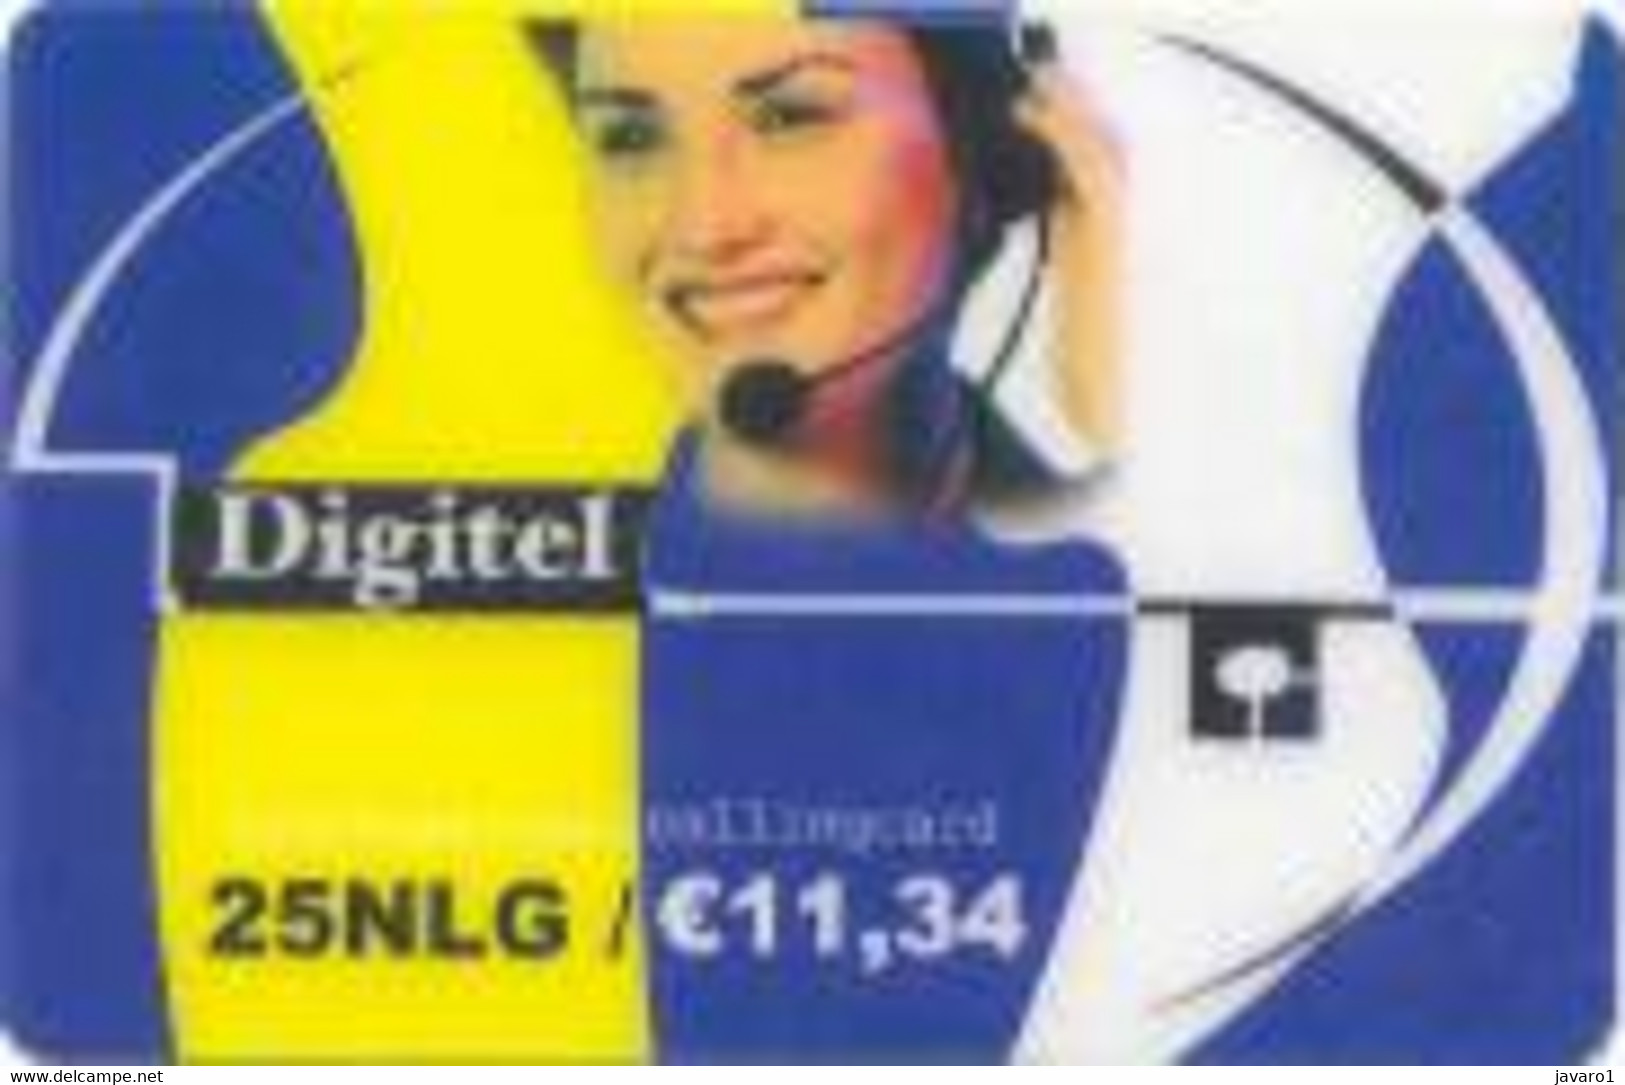 NETHERLAND : NED20 25NLG/e 11,34 DIGITEL Web+Phoning/ WHITE Rev. USED - A Identifier